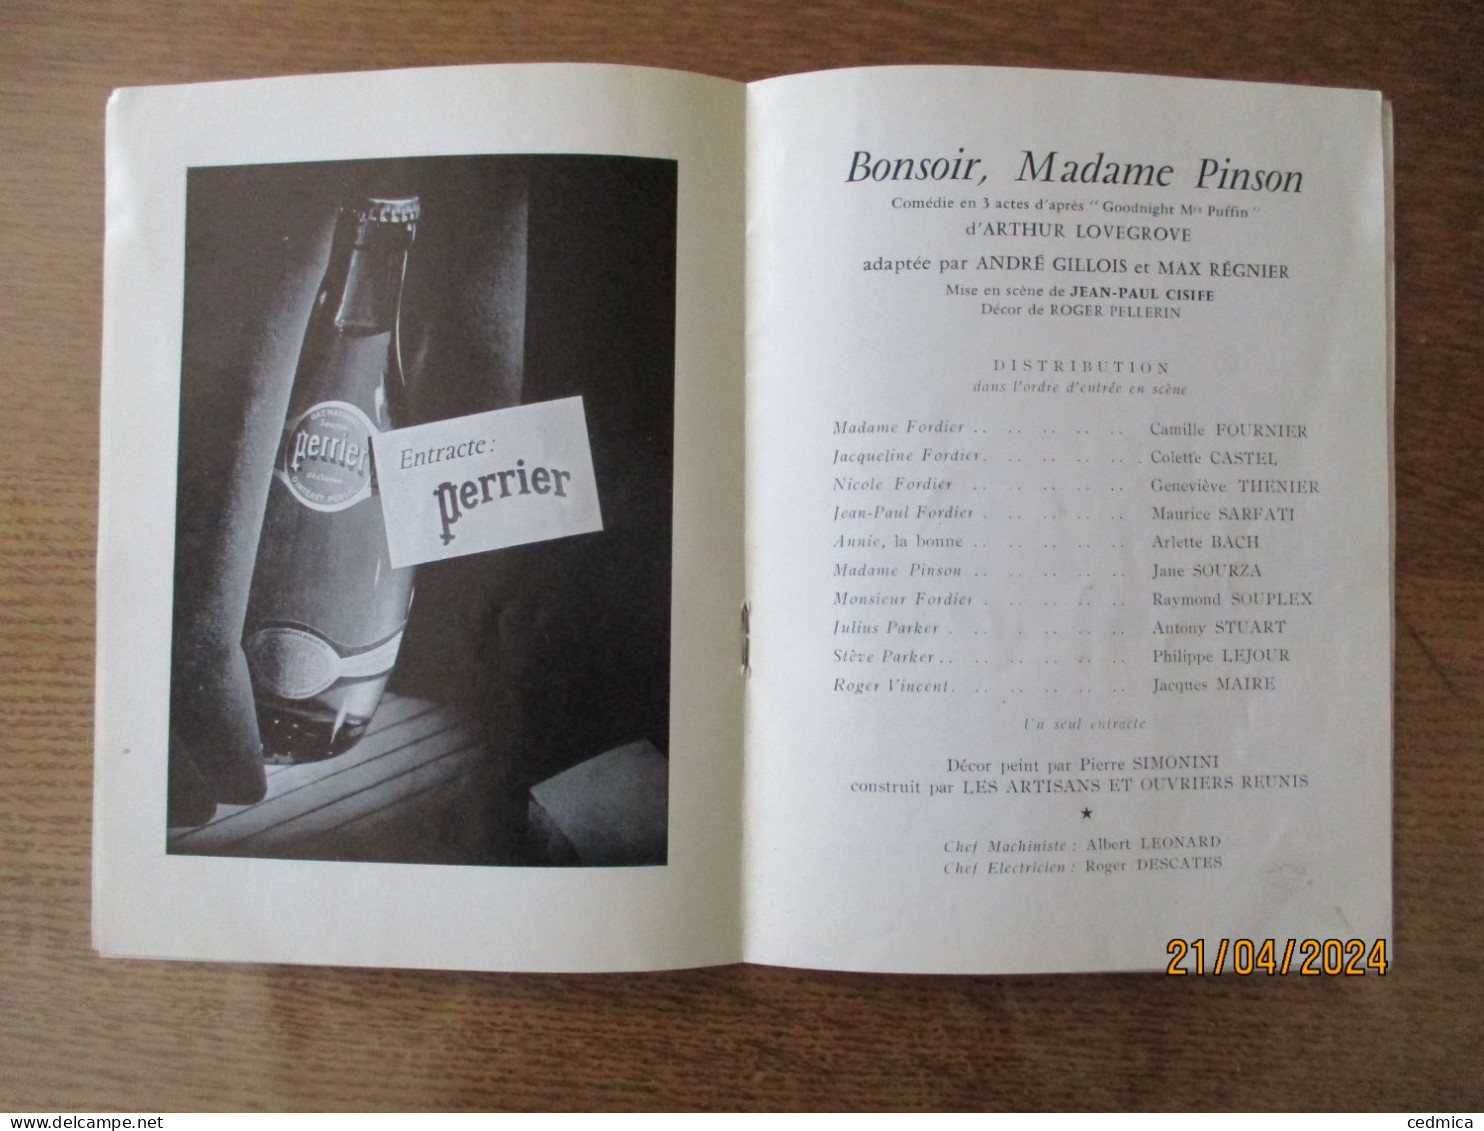 THEATRE DE LA PORTE St MARTIN SAISON 1963-1964 BONSOIR,MADAME PINSON - Programmi